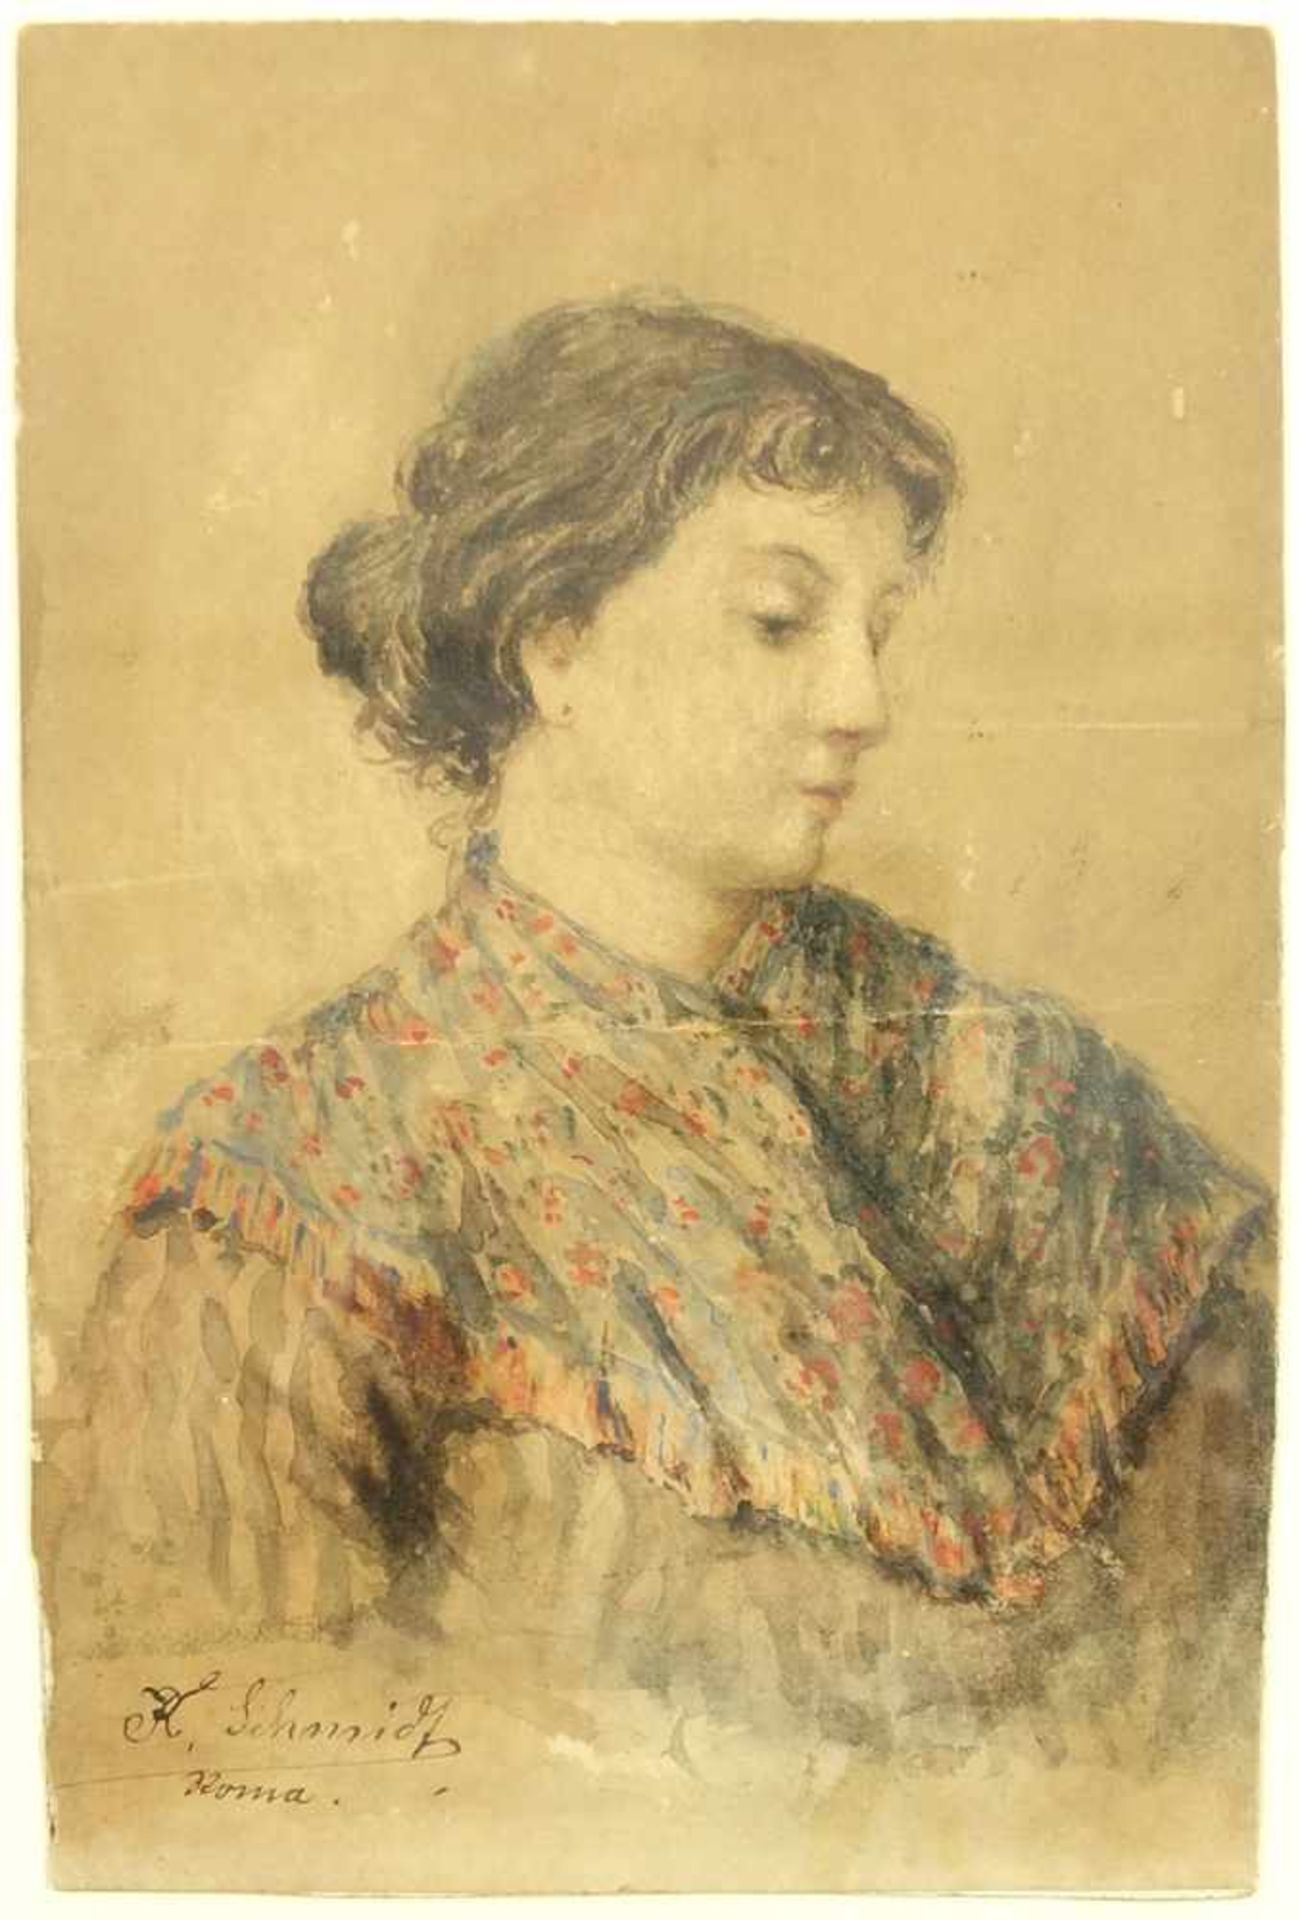 R. Schmidt, "Porträt einer Italienerin", 2. Hälfte 19. Jahrhundert, Aquarell/Papier, unten links